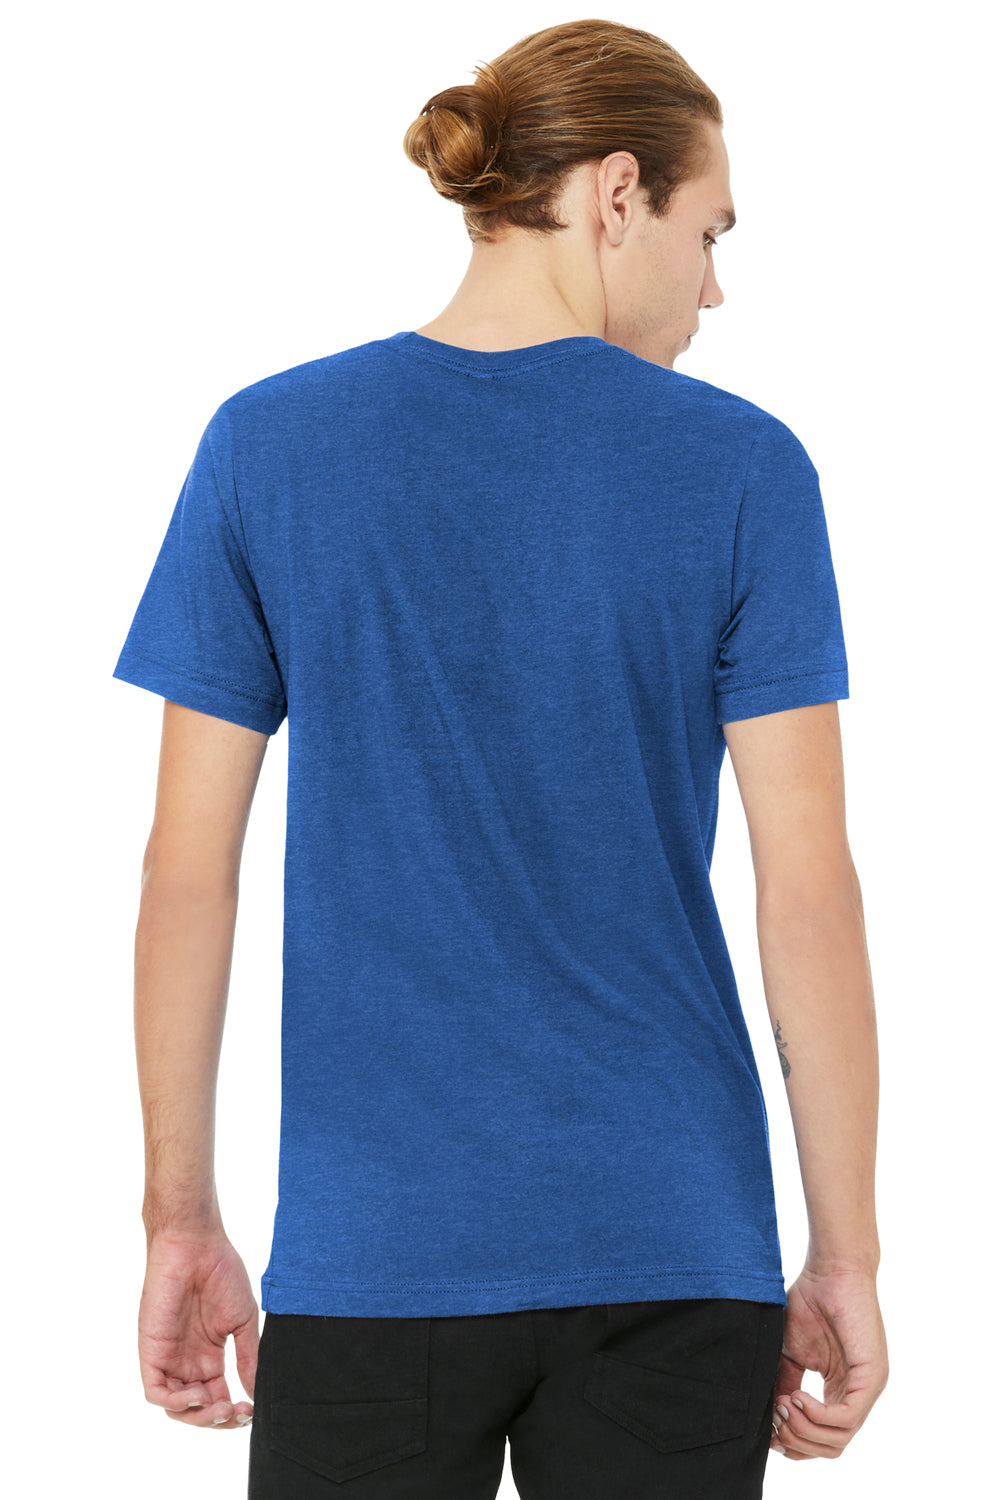 Bella + Canvas BC3005CVC Mens CVC Short Sleeve V-Neck T-Shirt Heather True Royal Blue Model Back